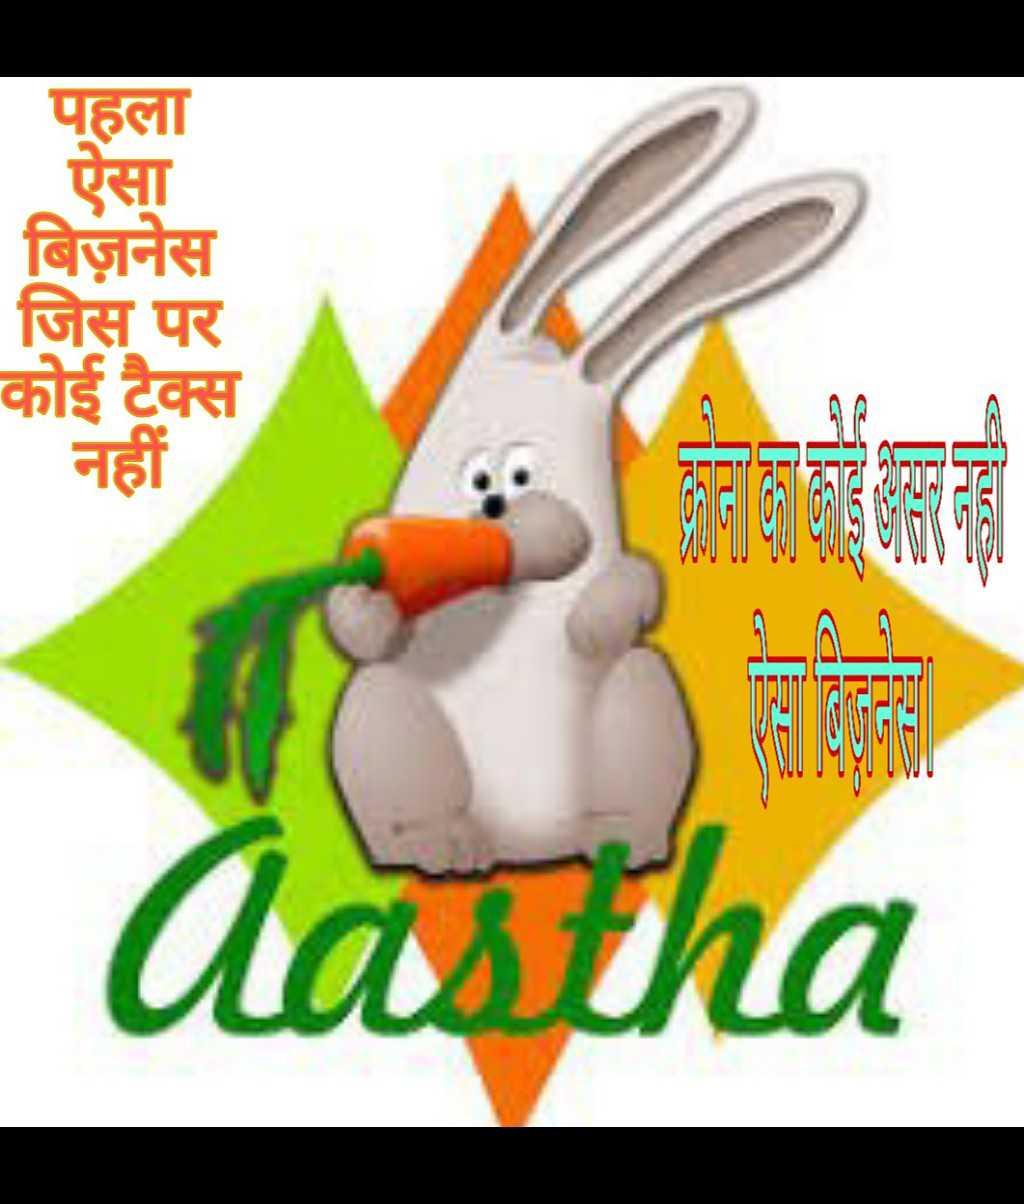 Aastha Rabbit Farming